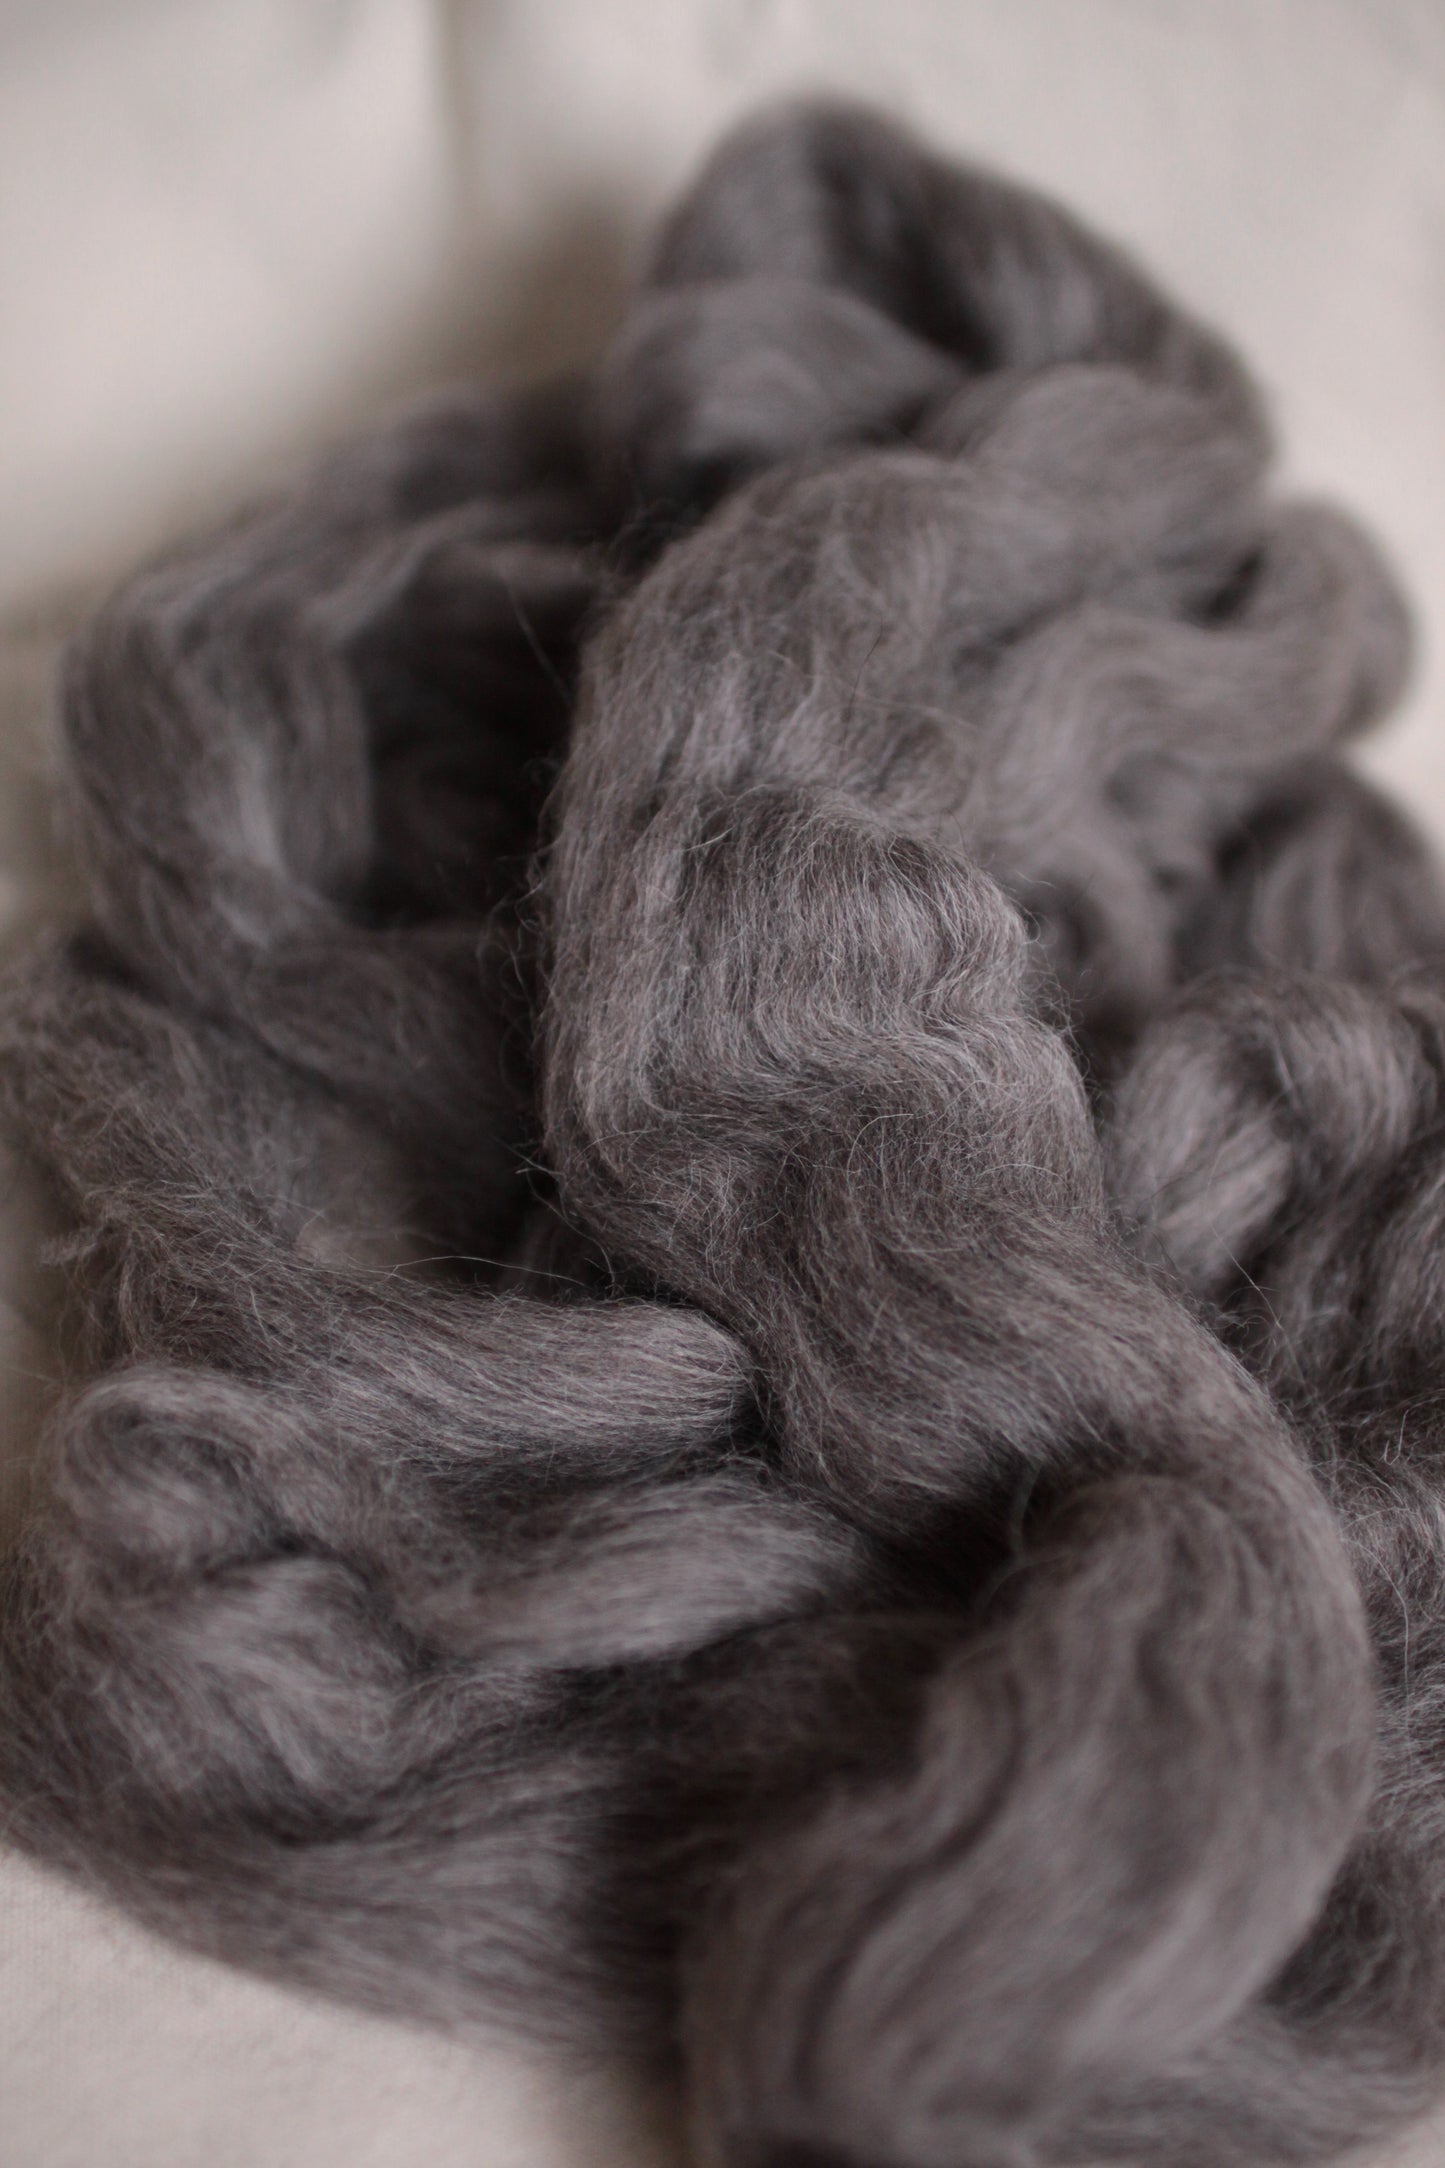 Icelandic roving/top wool - undyed grey spinning fibre 100 gm - bare (dark grey)